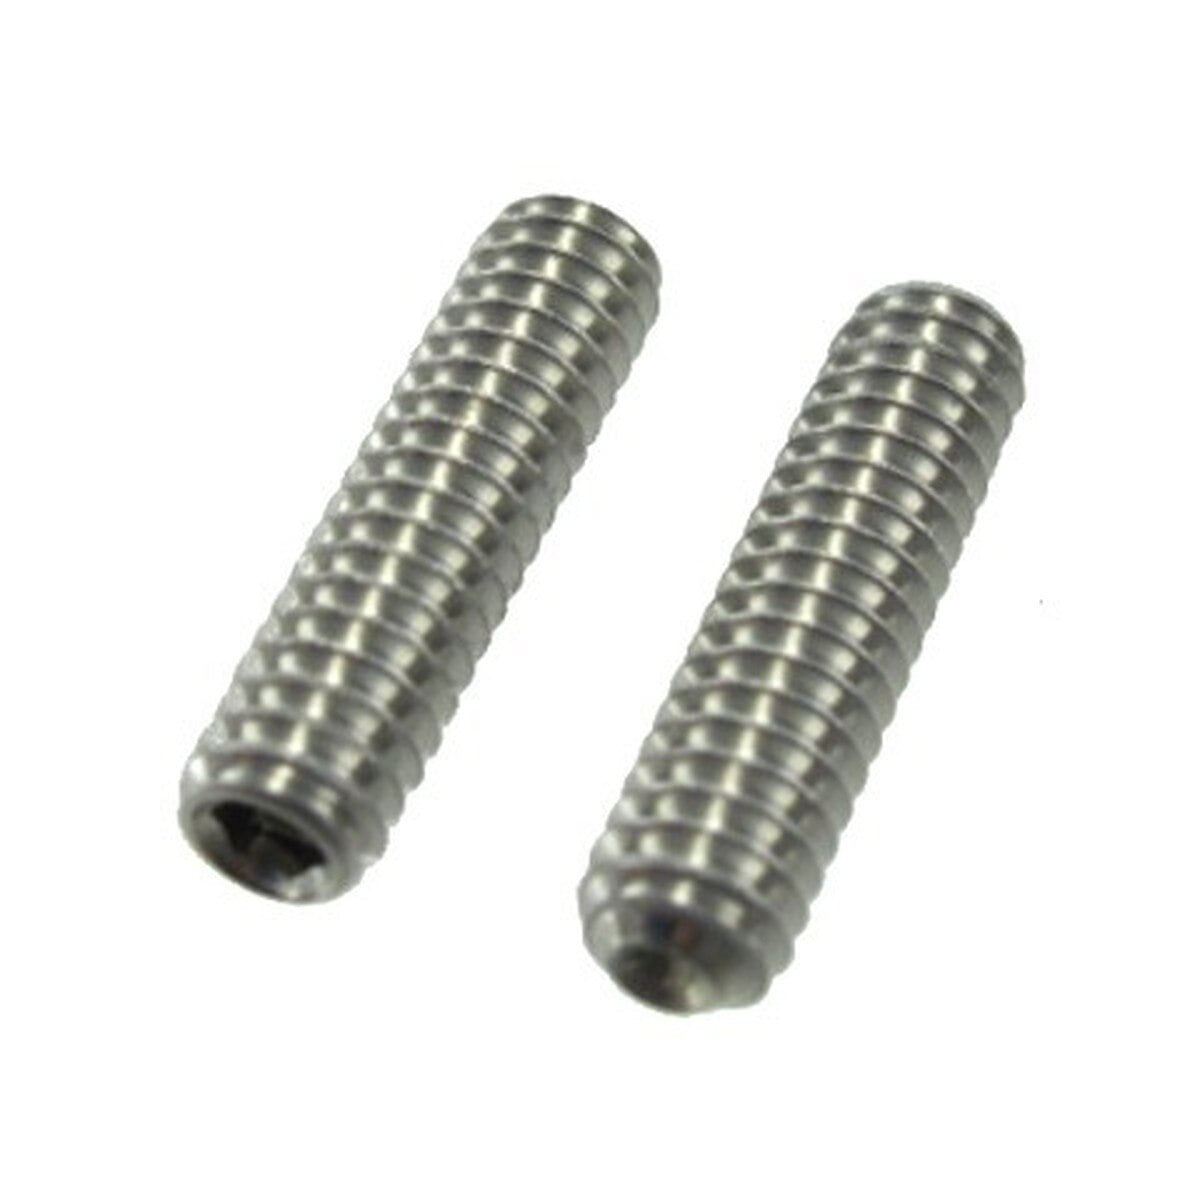 Pack of 35 pcs Steel Climax Metal C-143 Zinc Finish C-Series Set Screw Collar